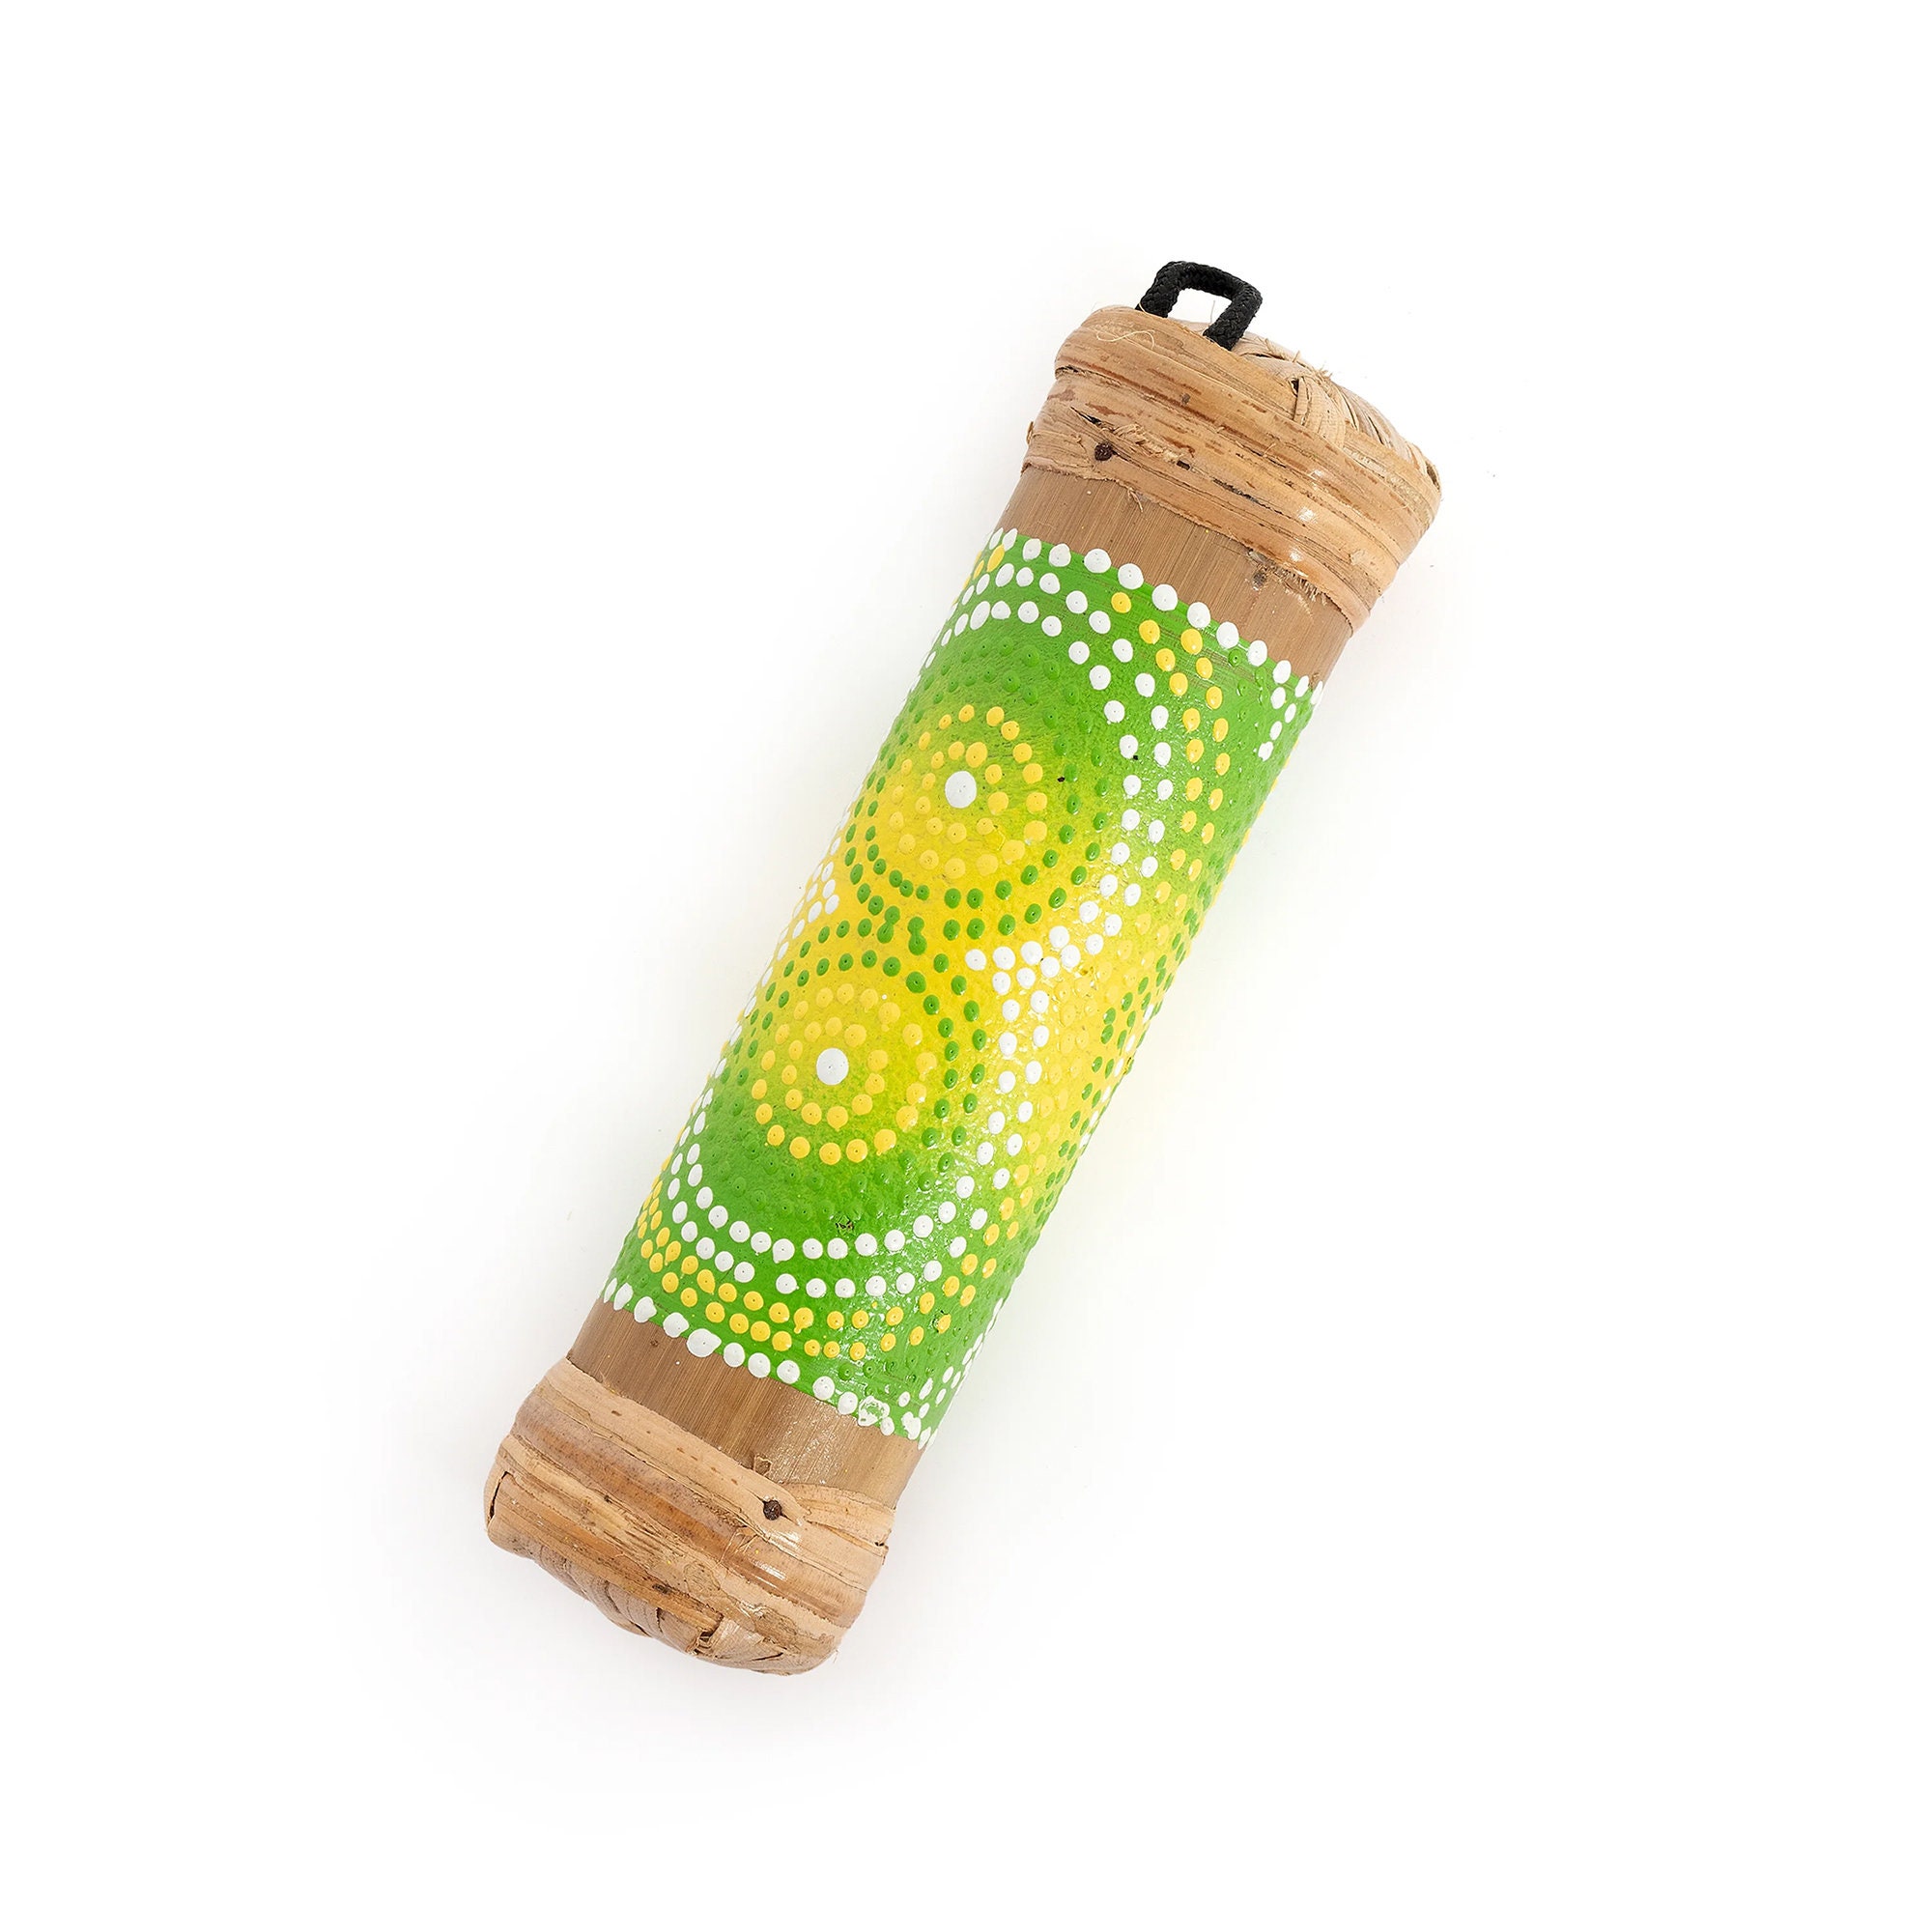 Bamboo Rain Stick Colors - Coloring Kit for Kids